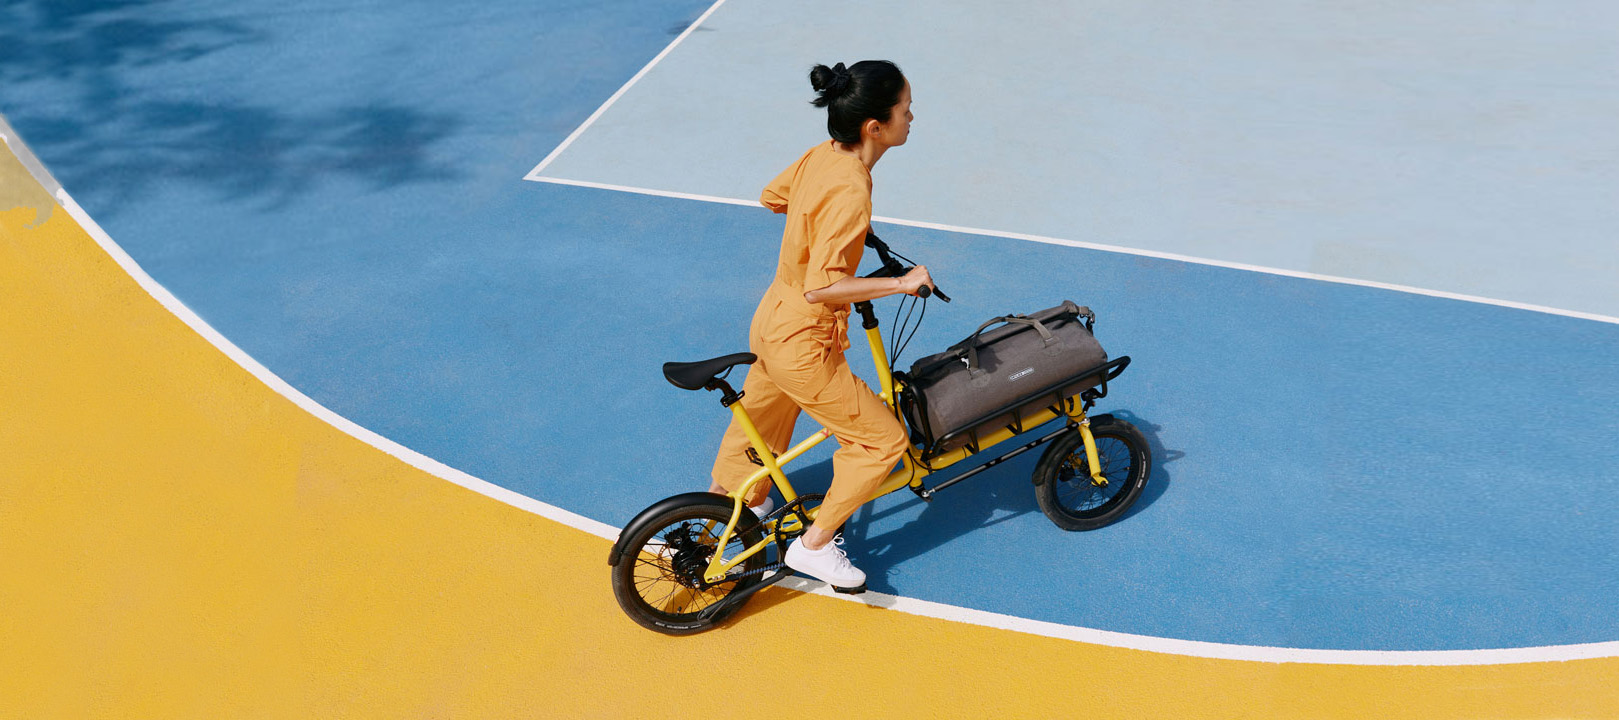 YOONIT - Mini Cargobike, max mobili